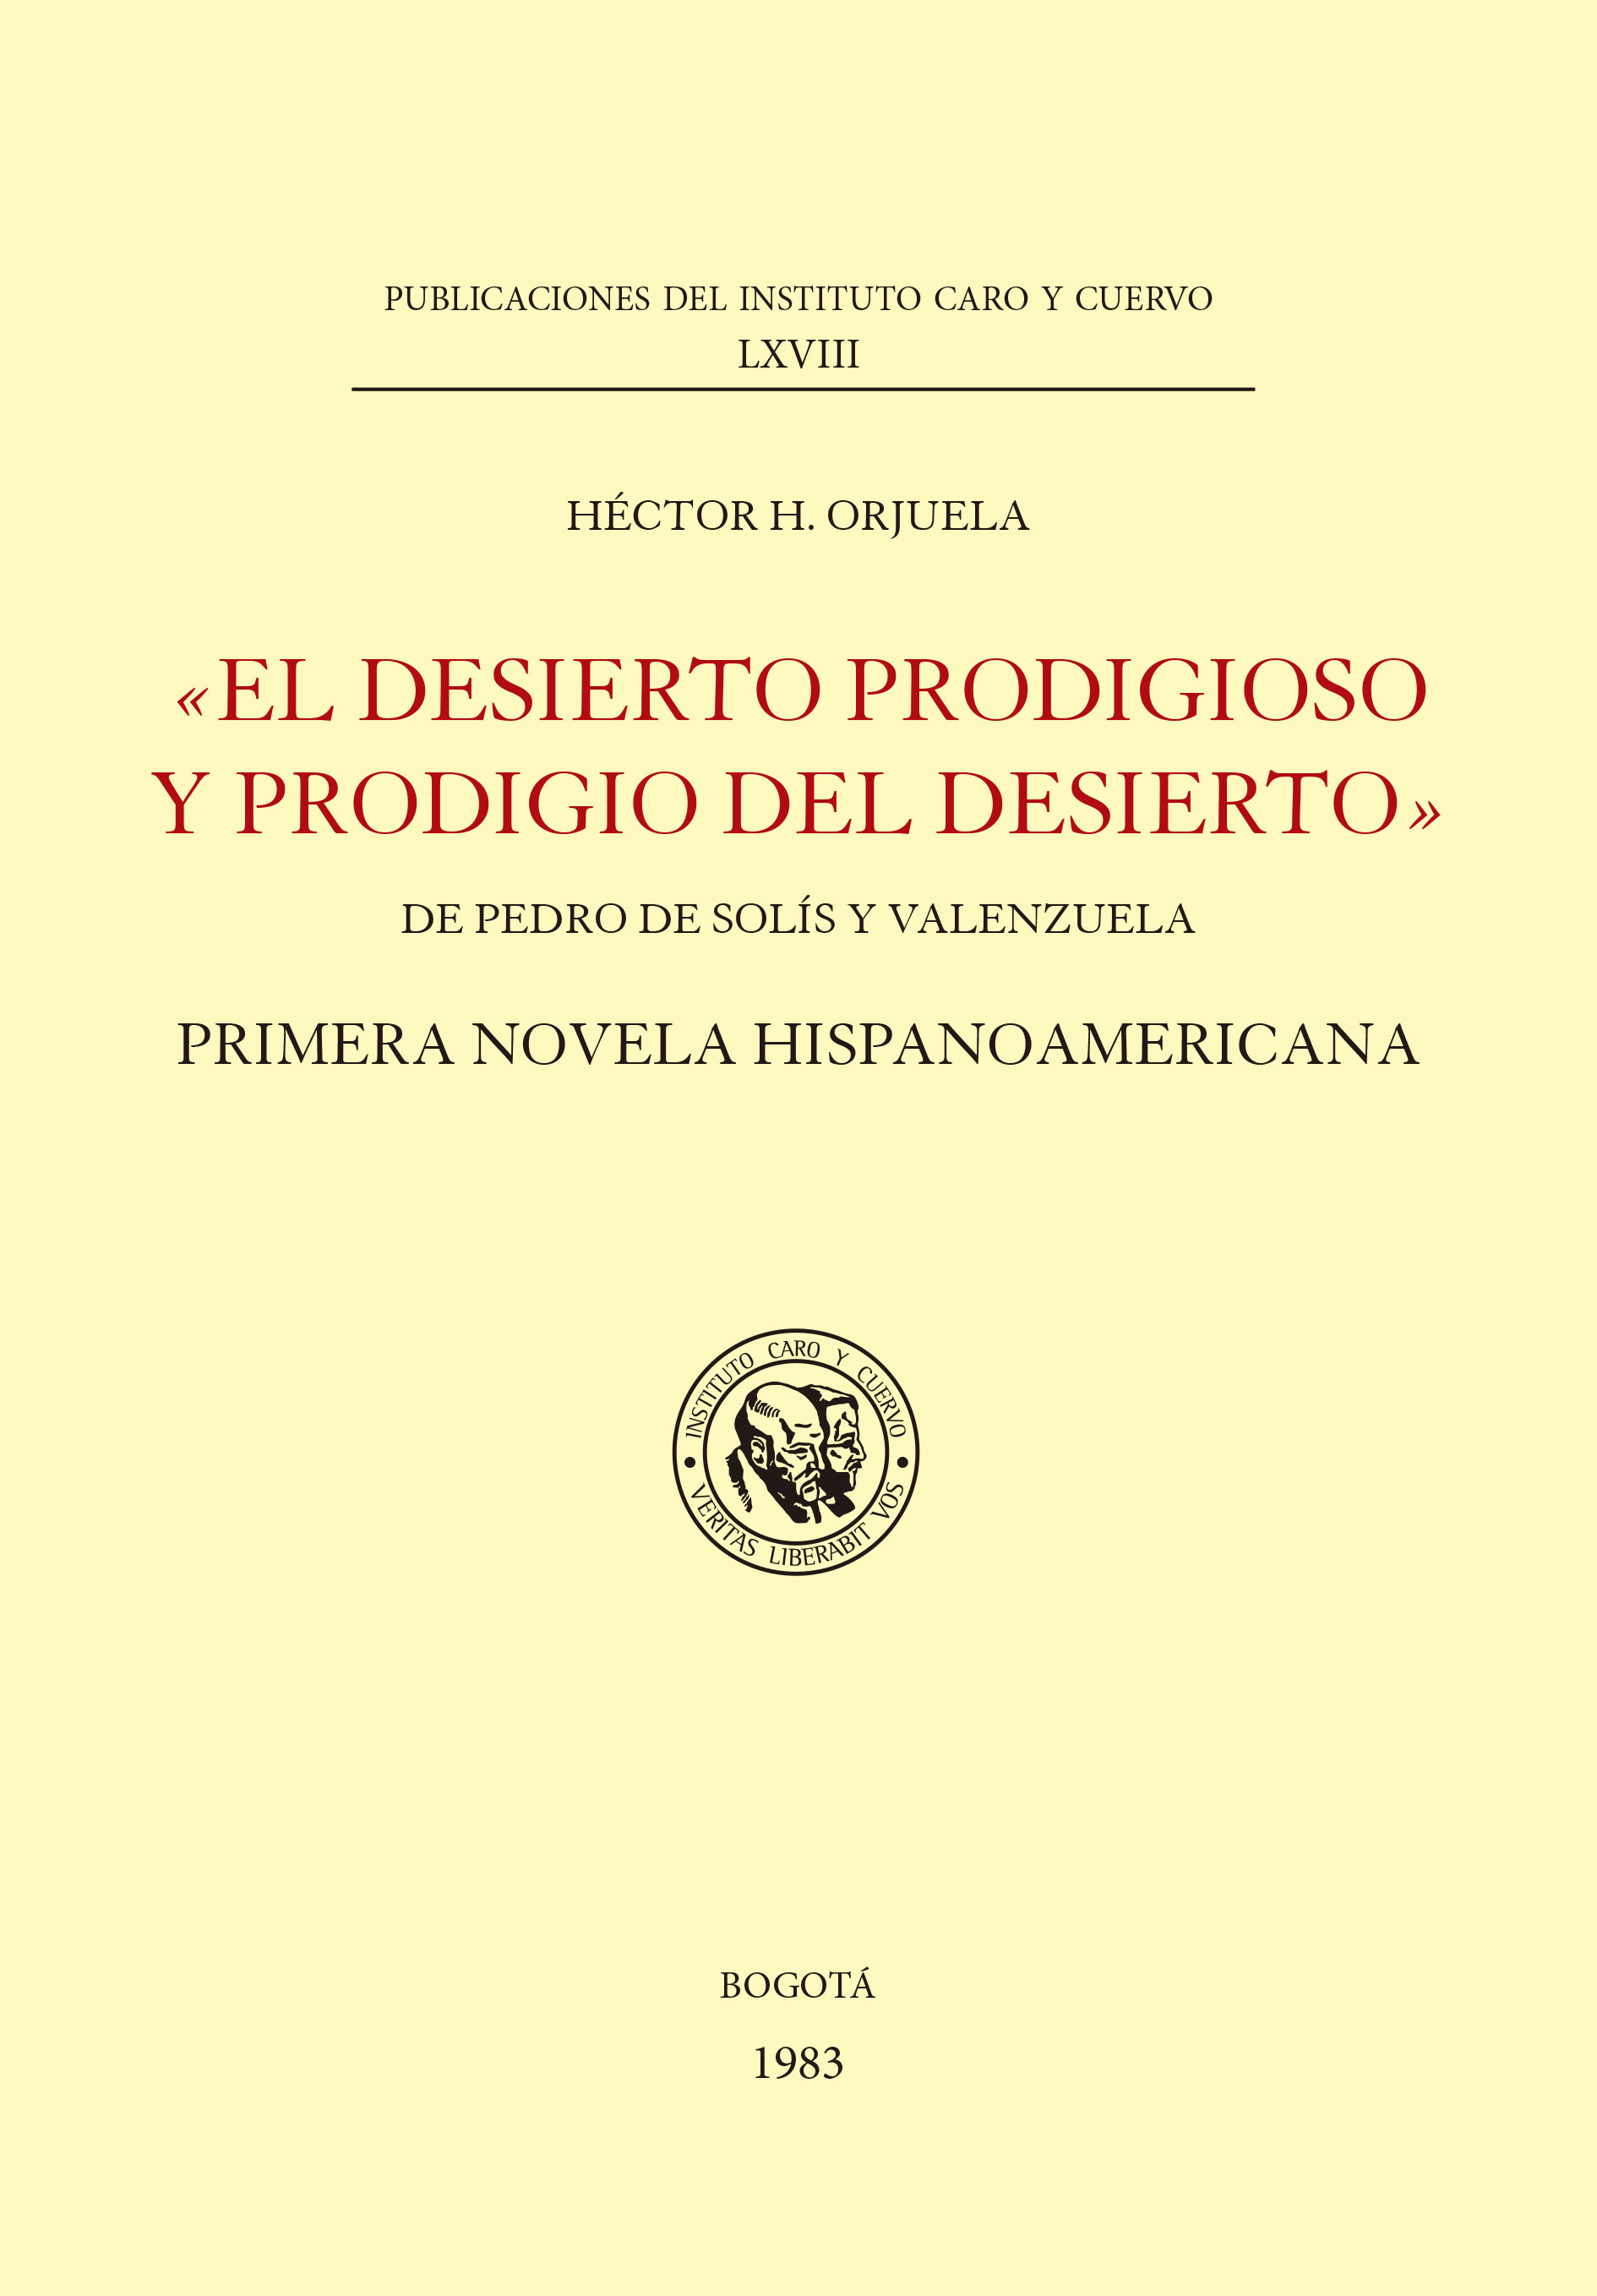 «El desierto prodigioso y prodigio del desierto» de Pedro Solís y Valenzuela, primera novela hispanoamericana